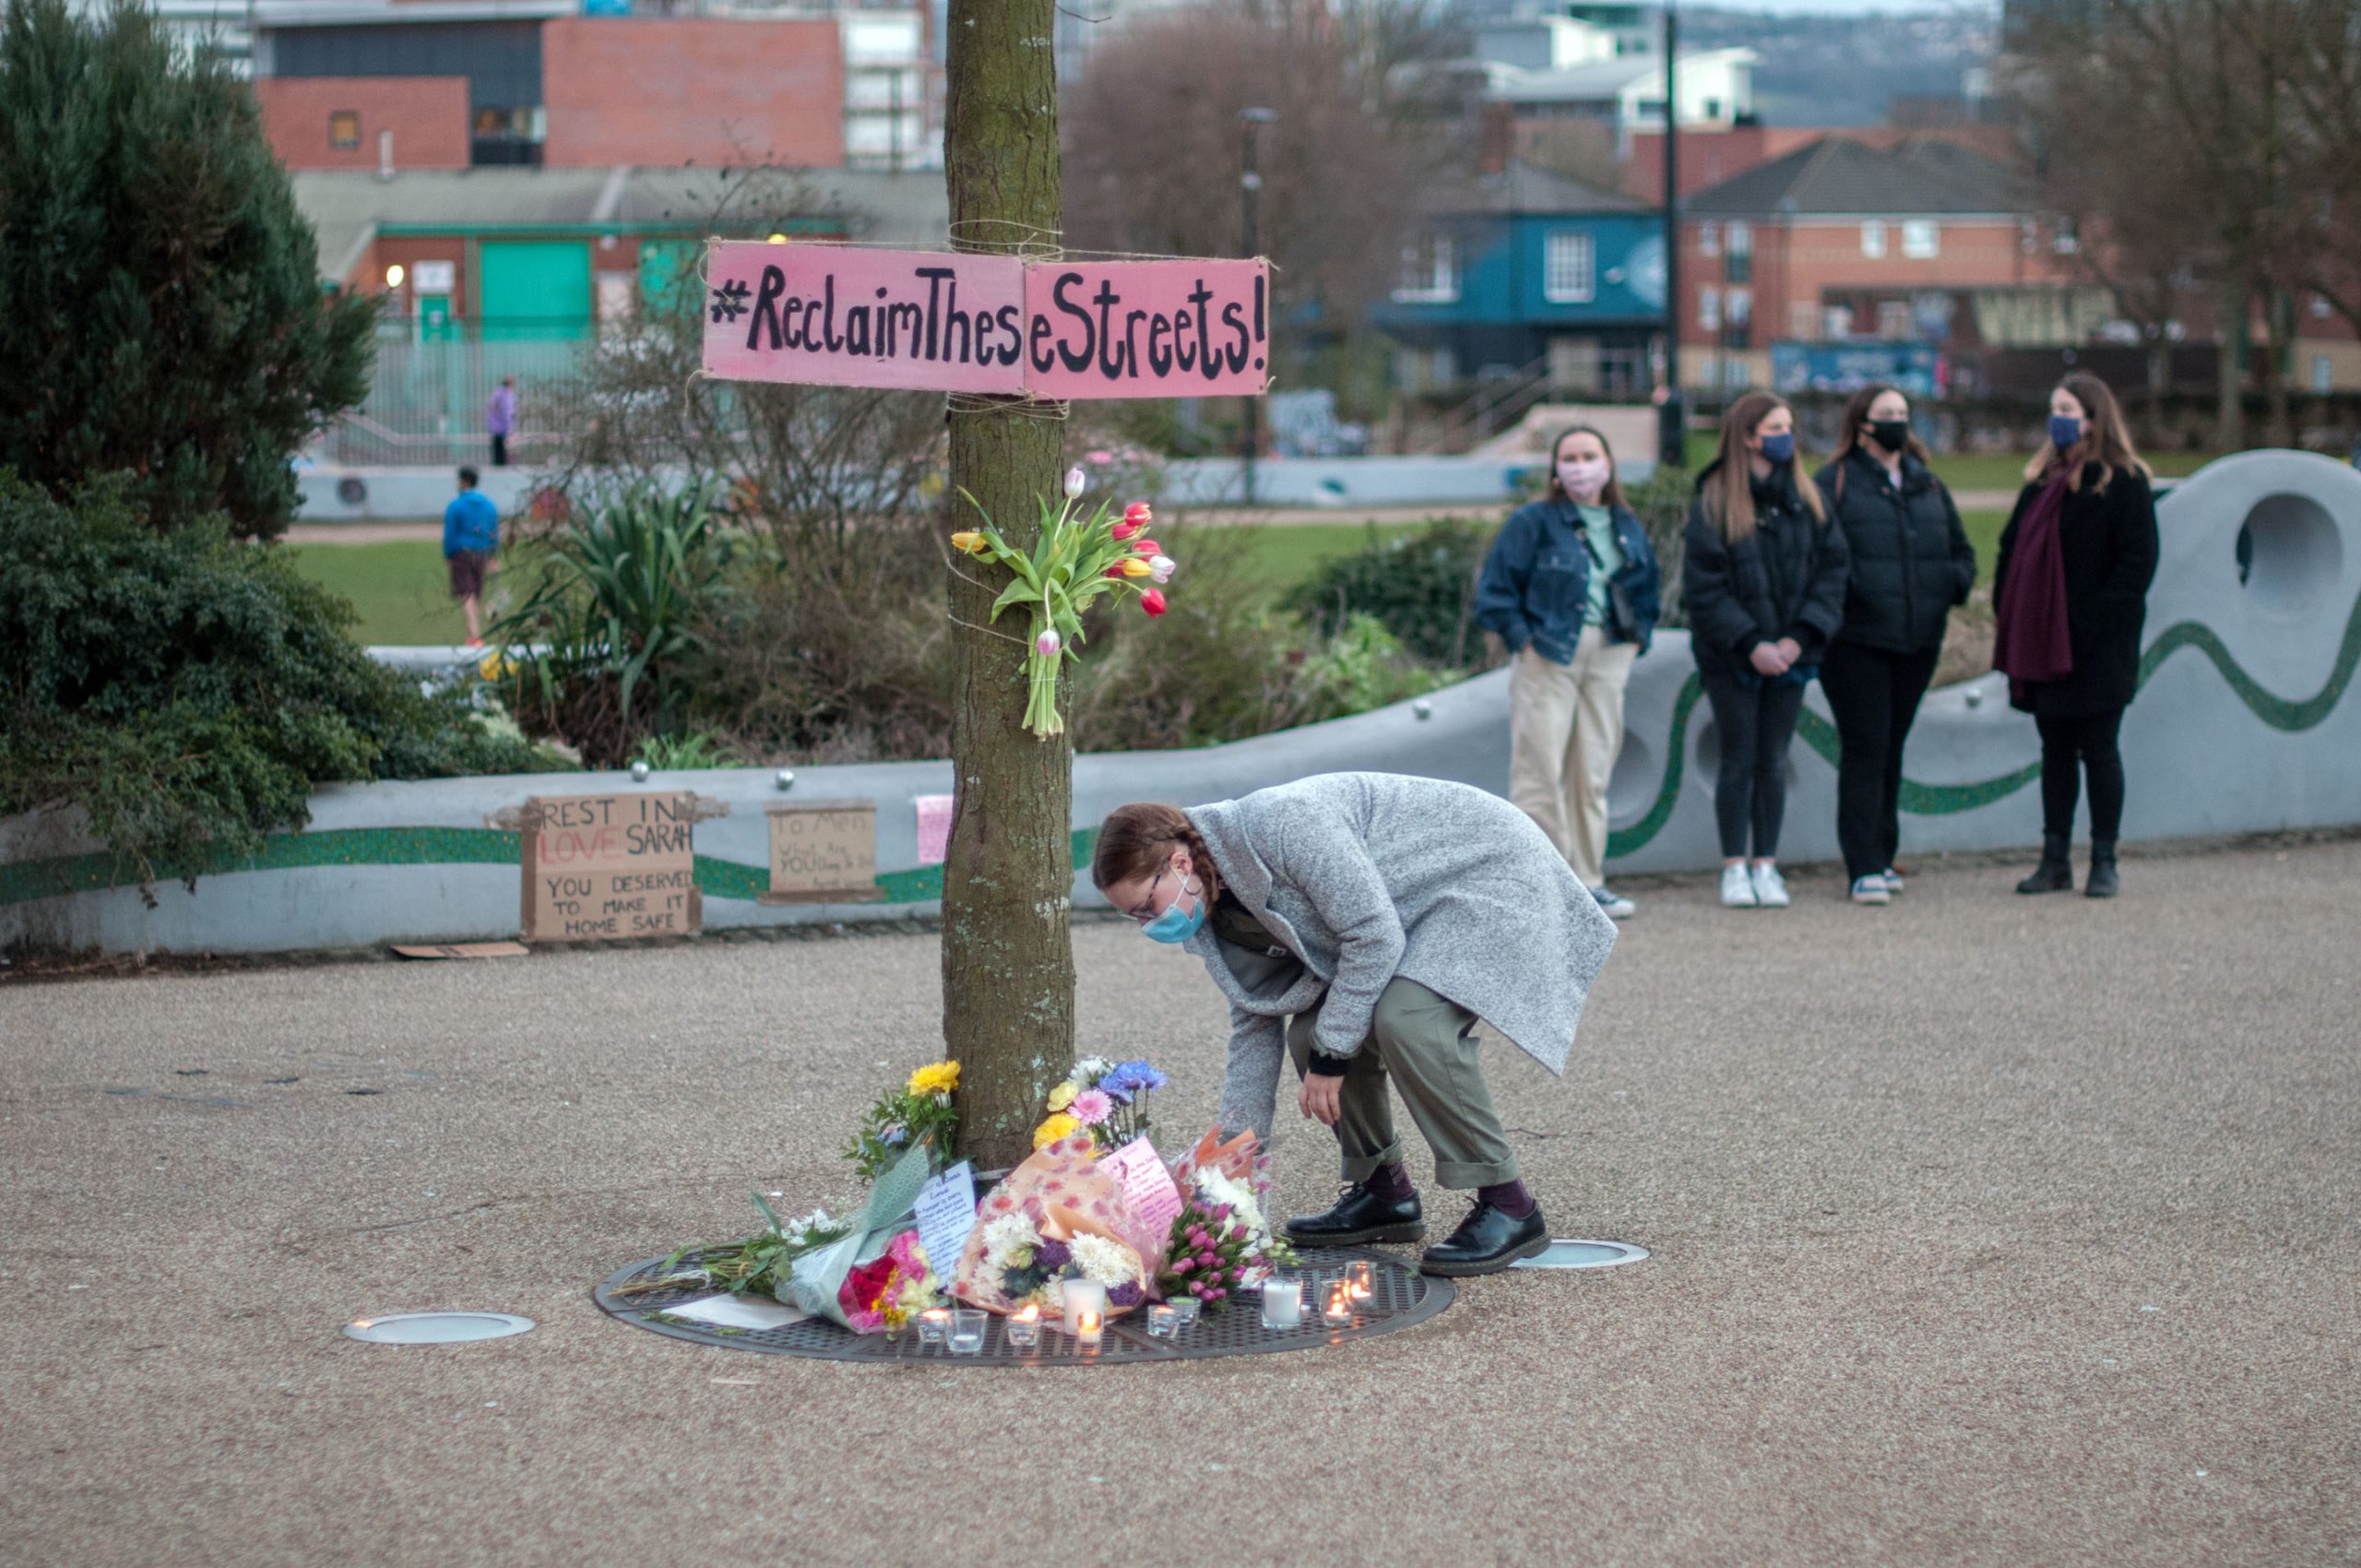 A vigil for Sarah Everard in Sheffield.